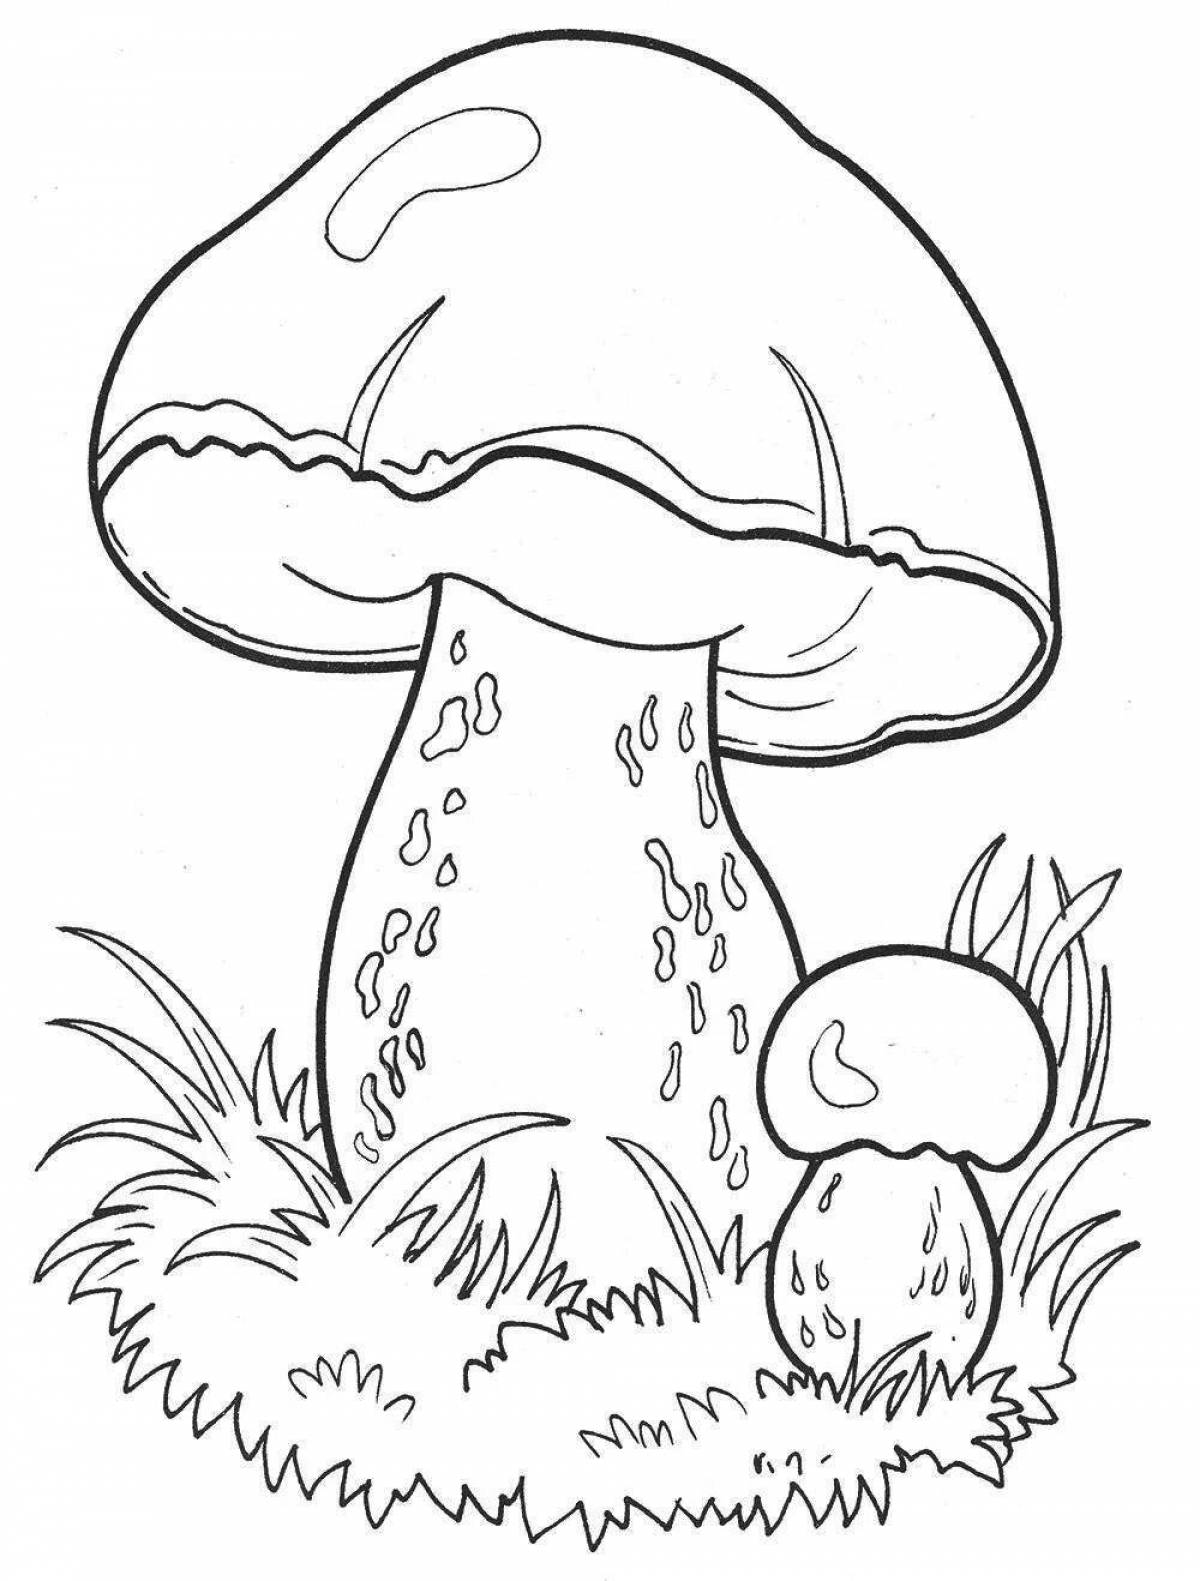 Coloring book sparkling mushroom boletus